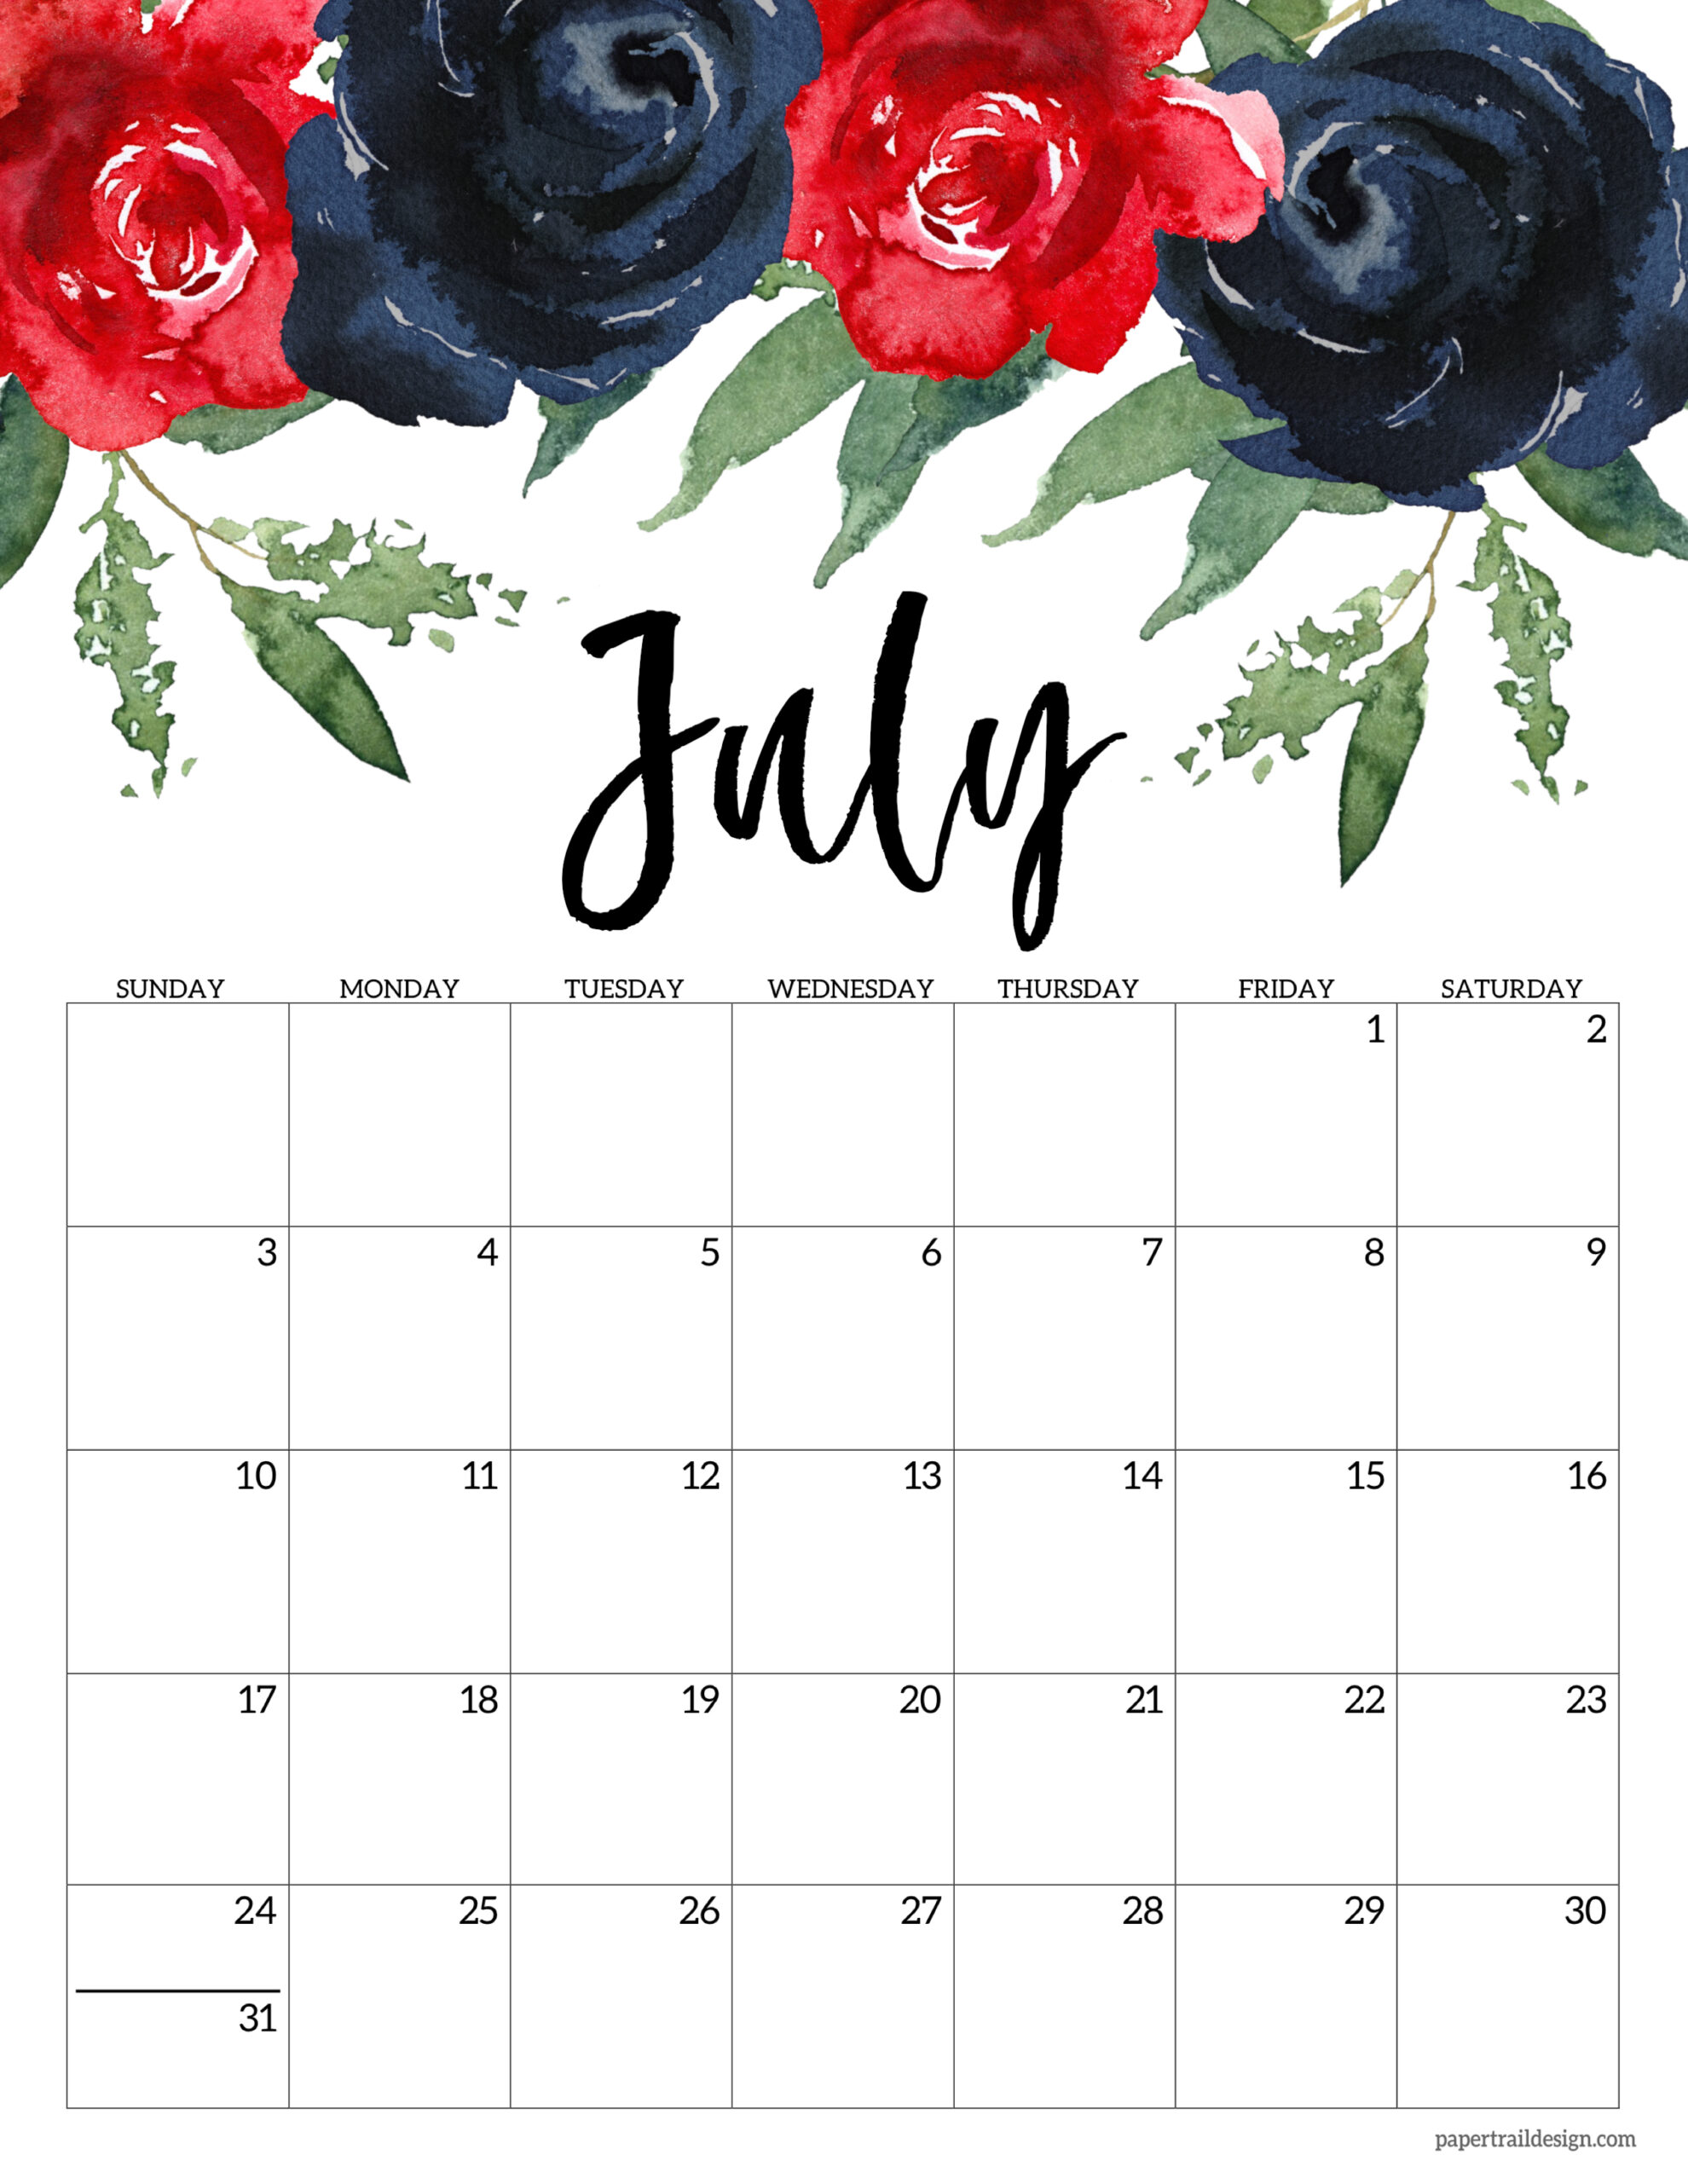 June July 2022 Calendar Free 2022 Calendar Printable - Floral - Paper Trail Design